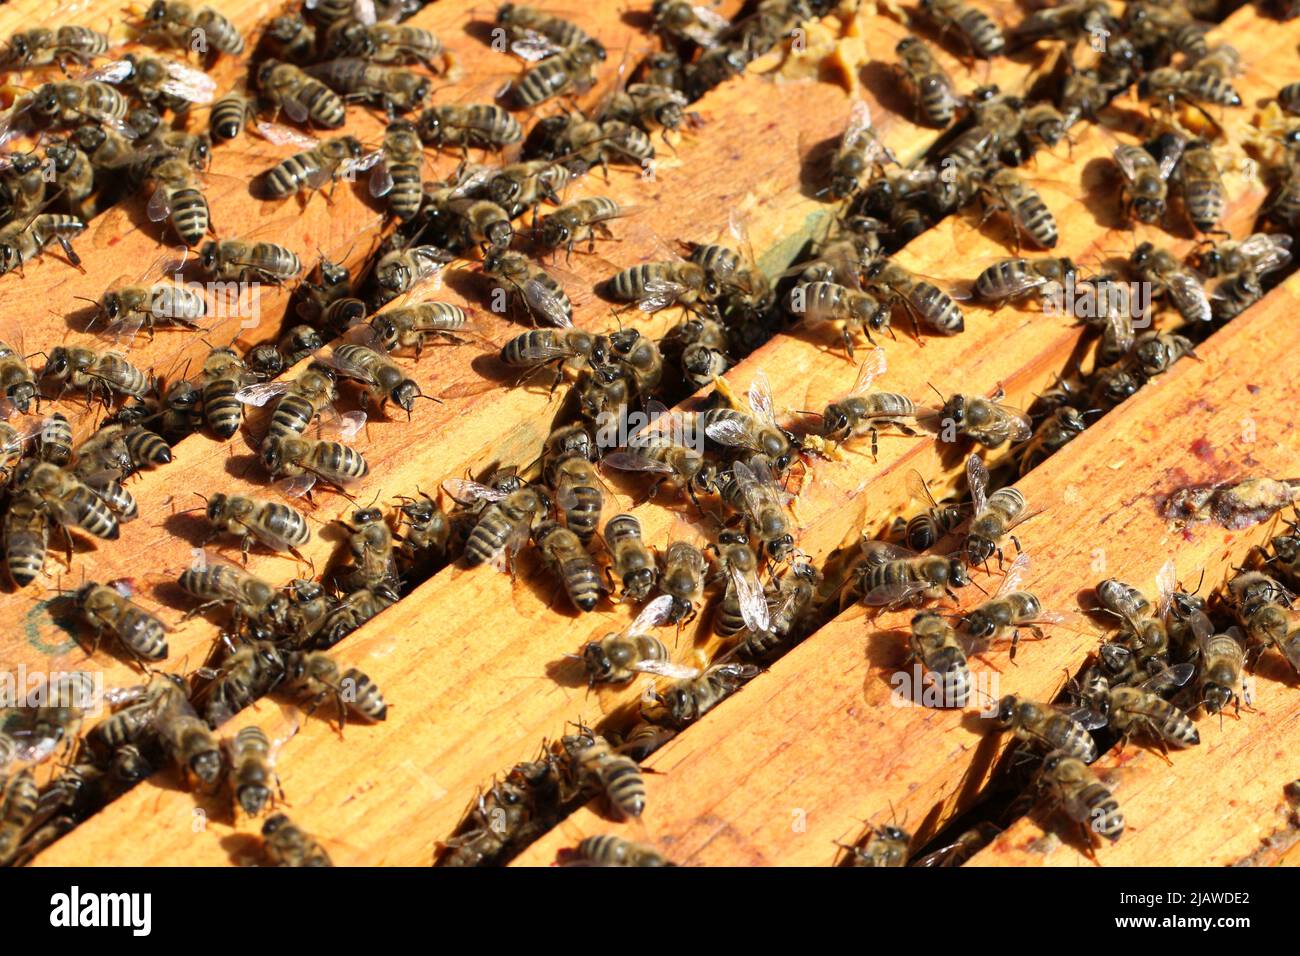 Honeybees in the hive Stock Photo